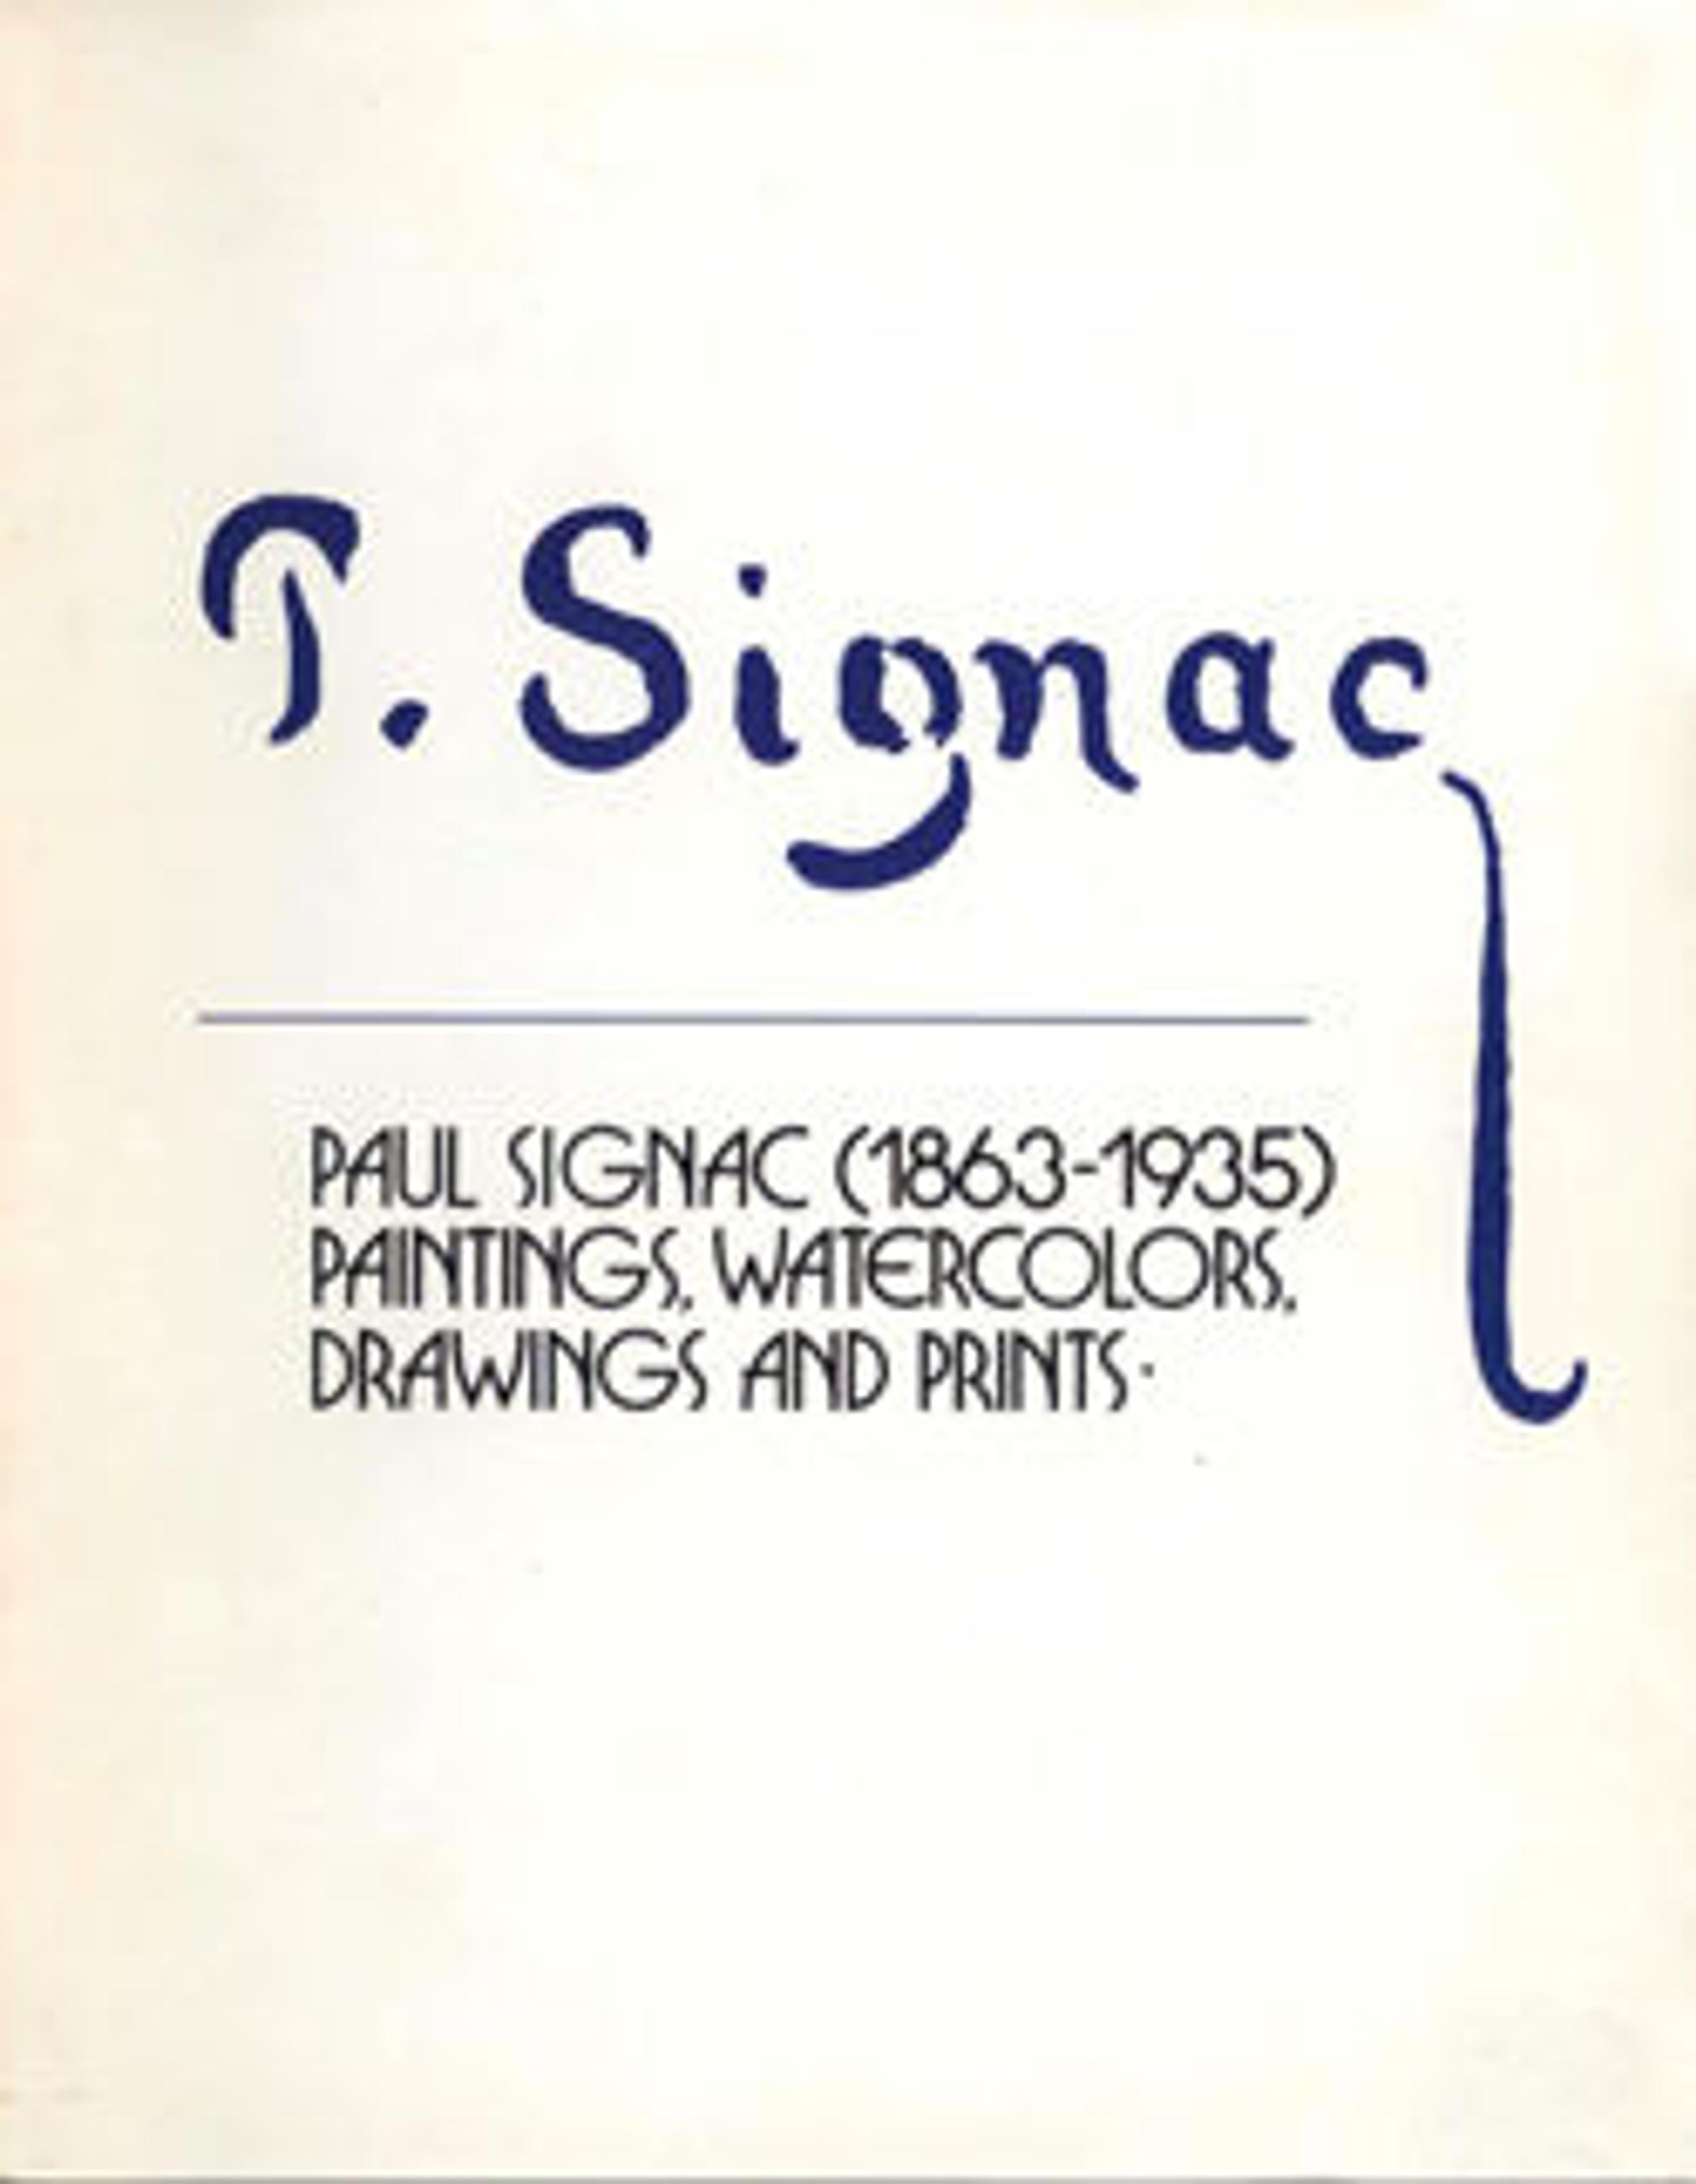 Paul Signac (1863-1935): Paintings, Watercolors, Drawings, and Prints